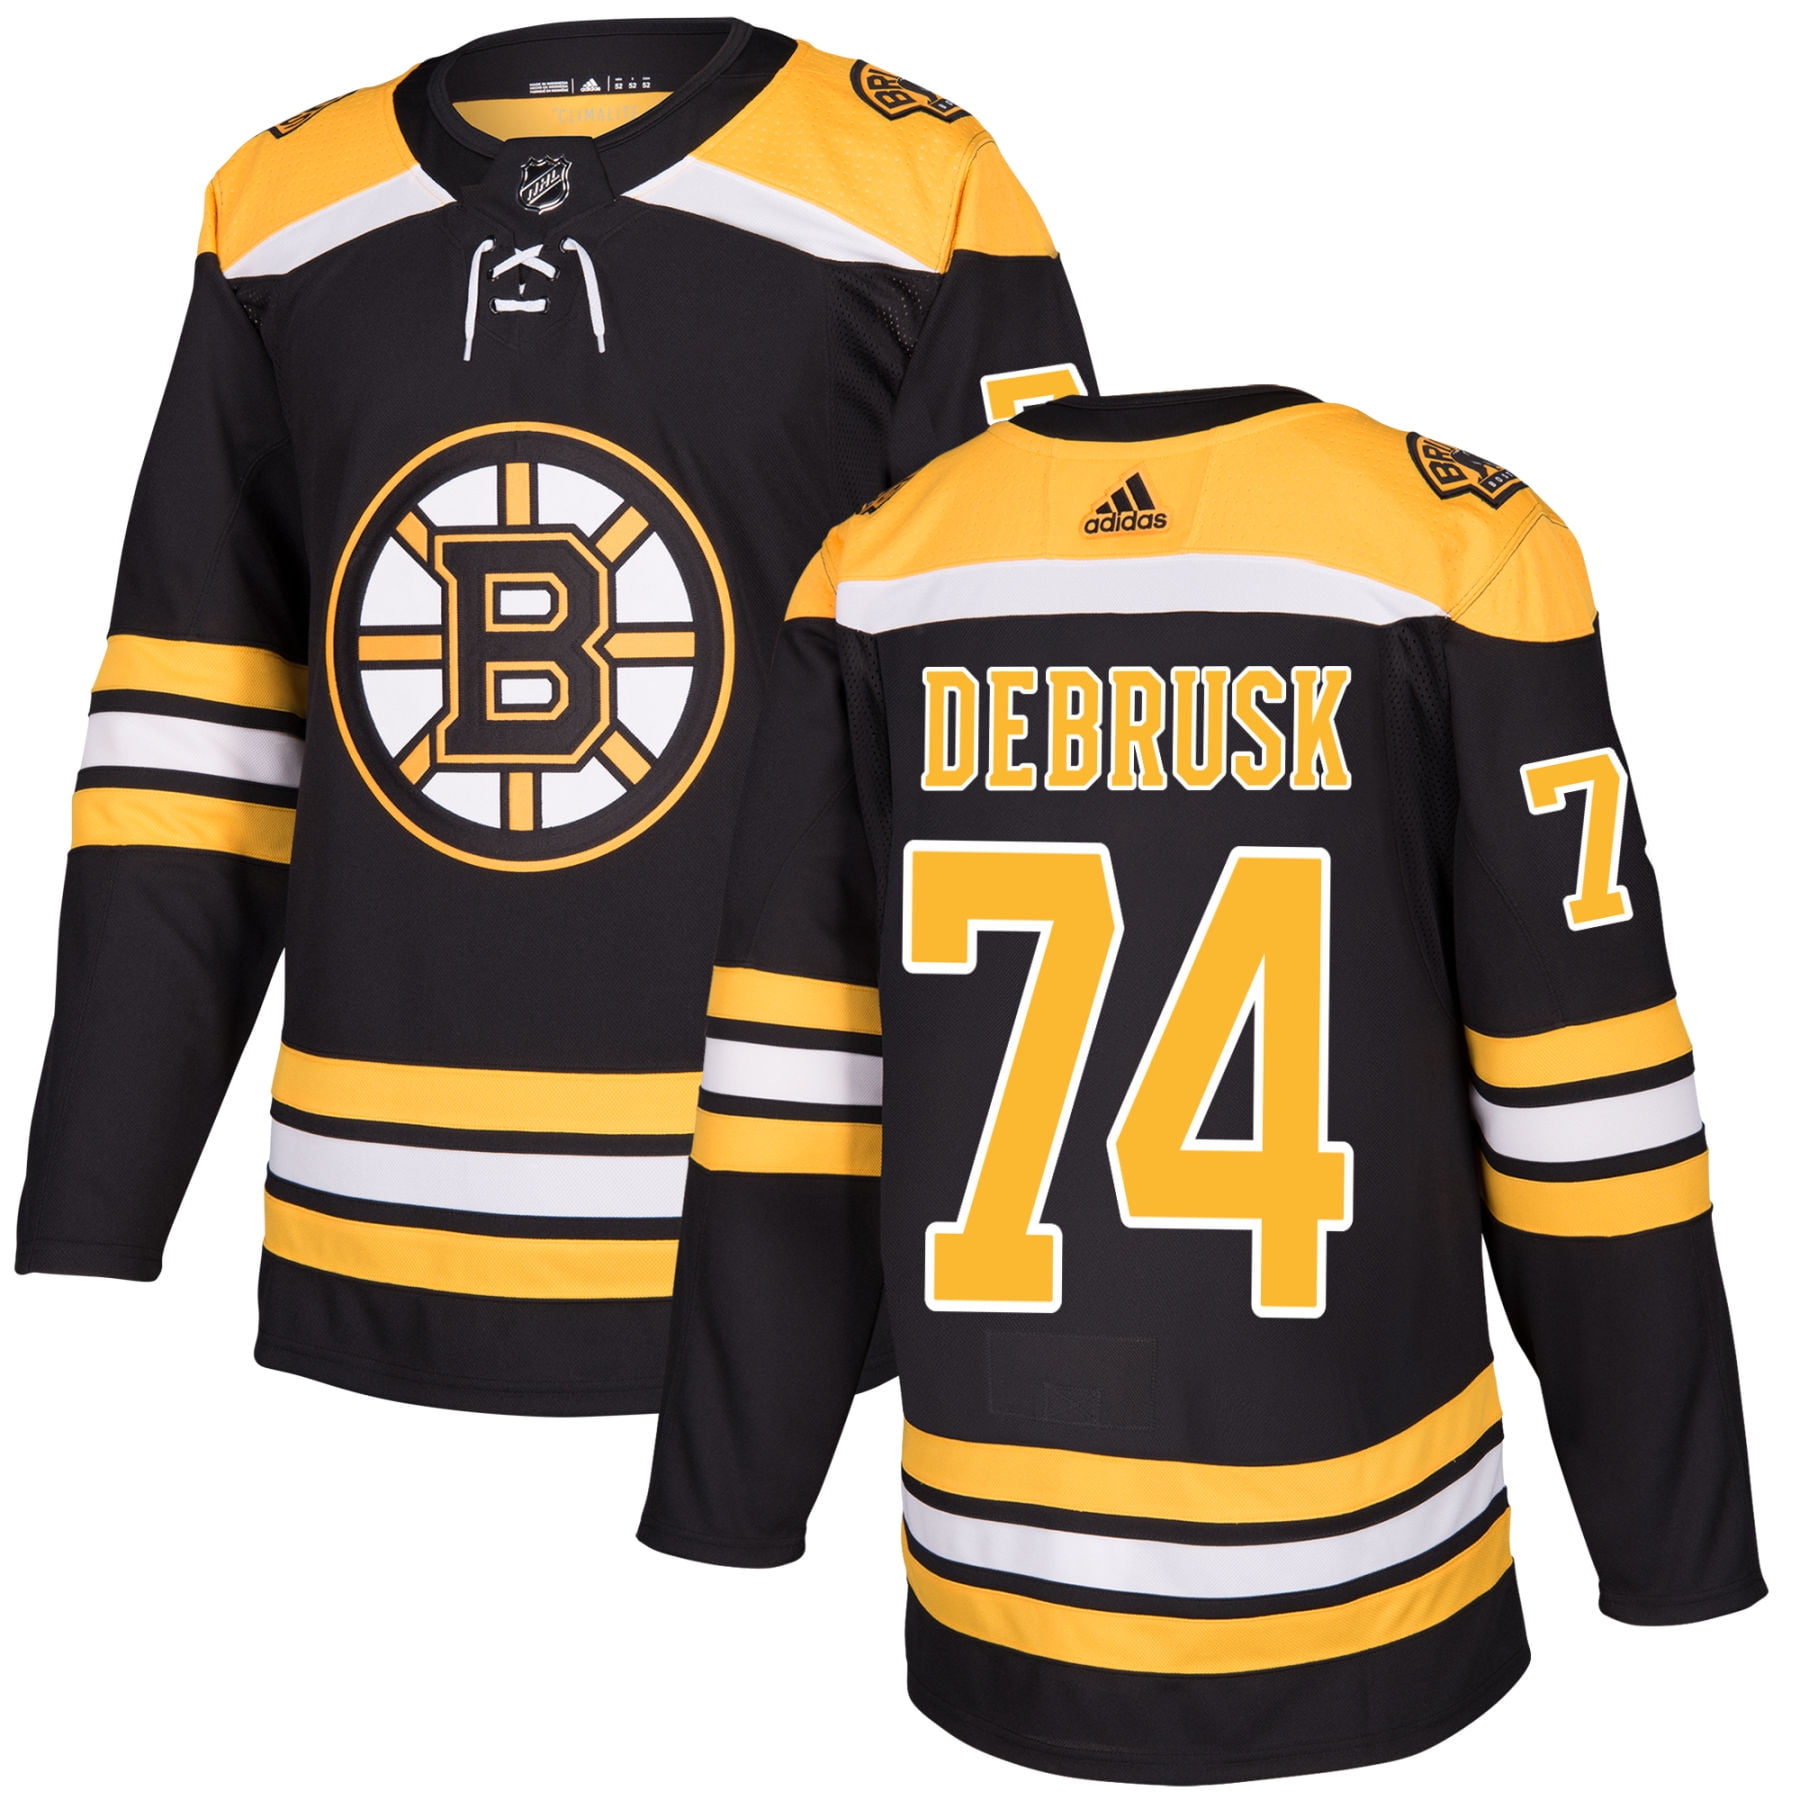 Jake DeBrusk Boston Bruins adidas NHL 